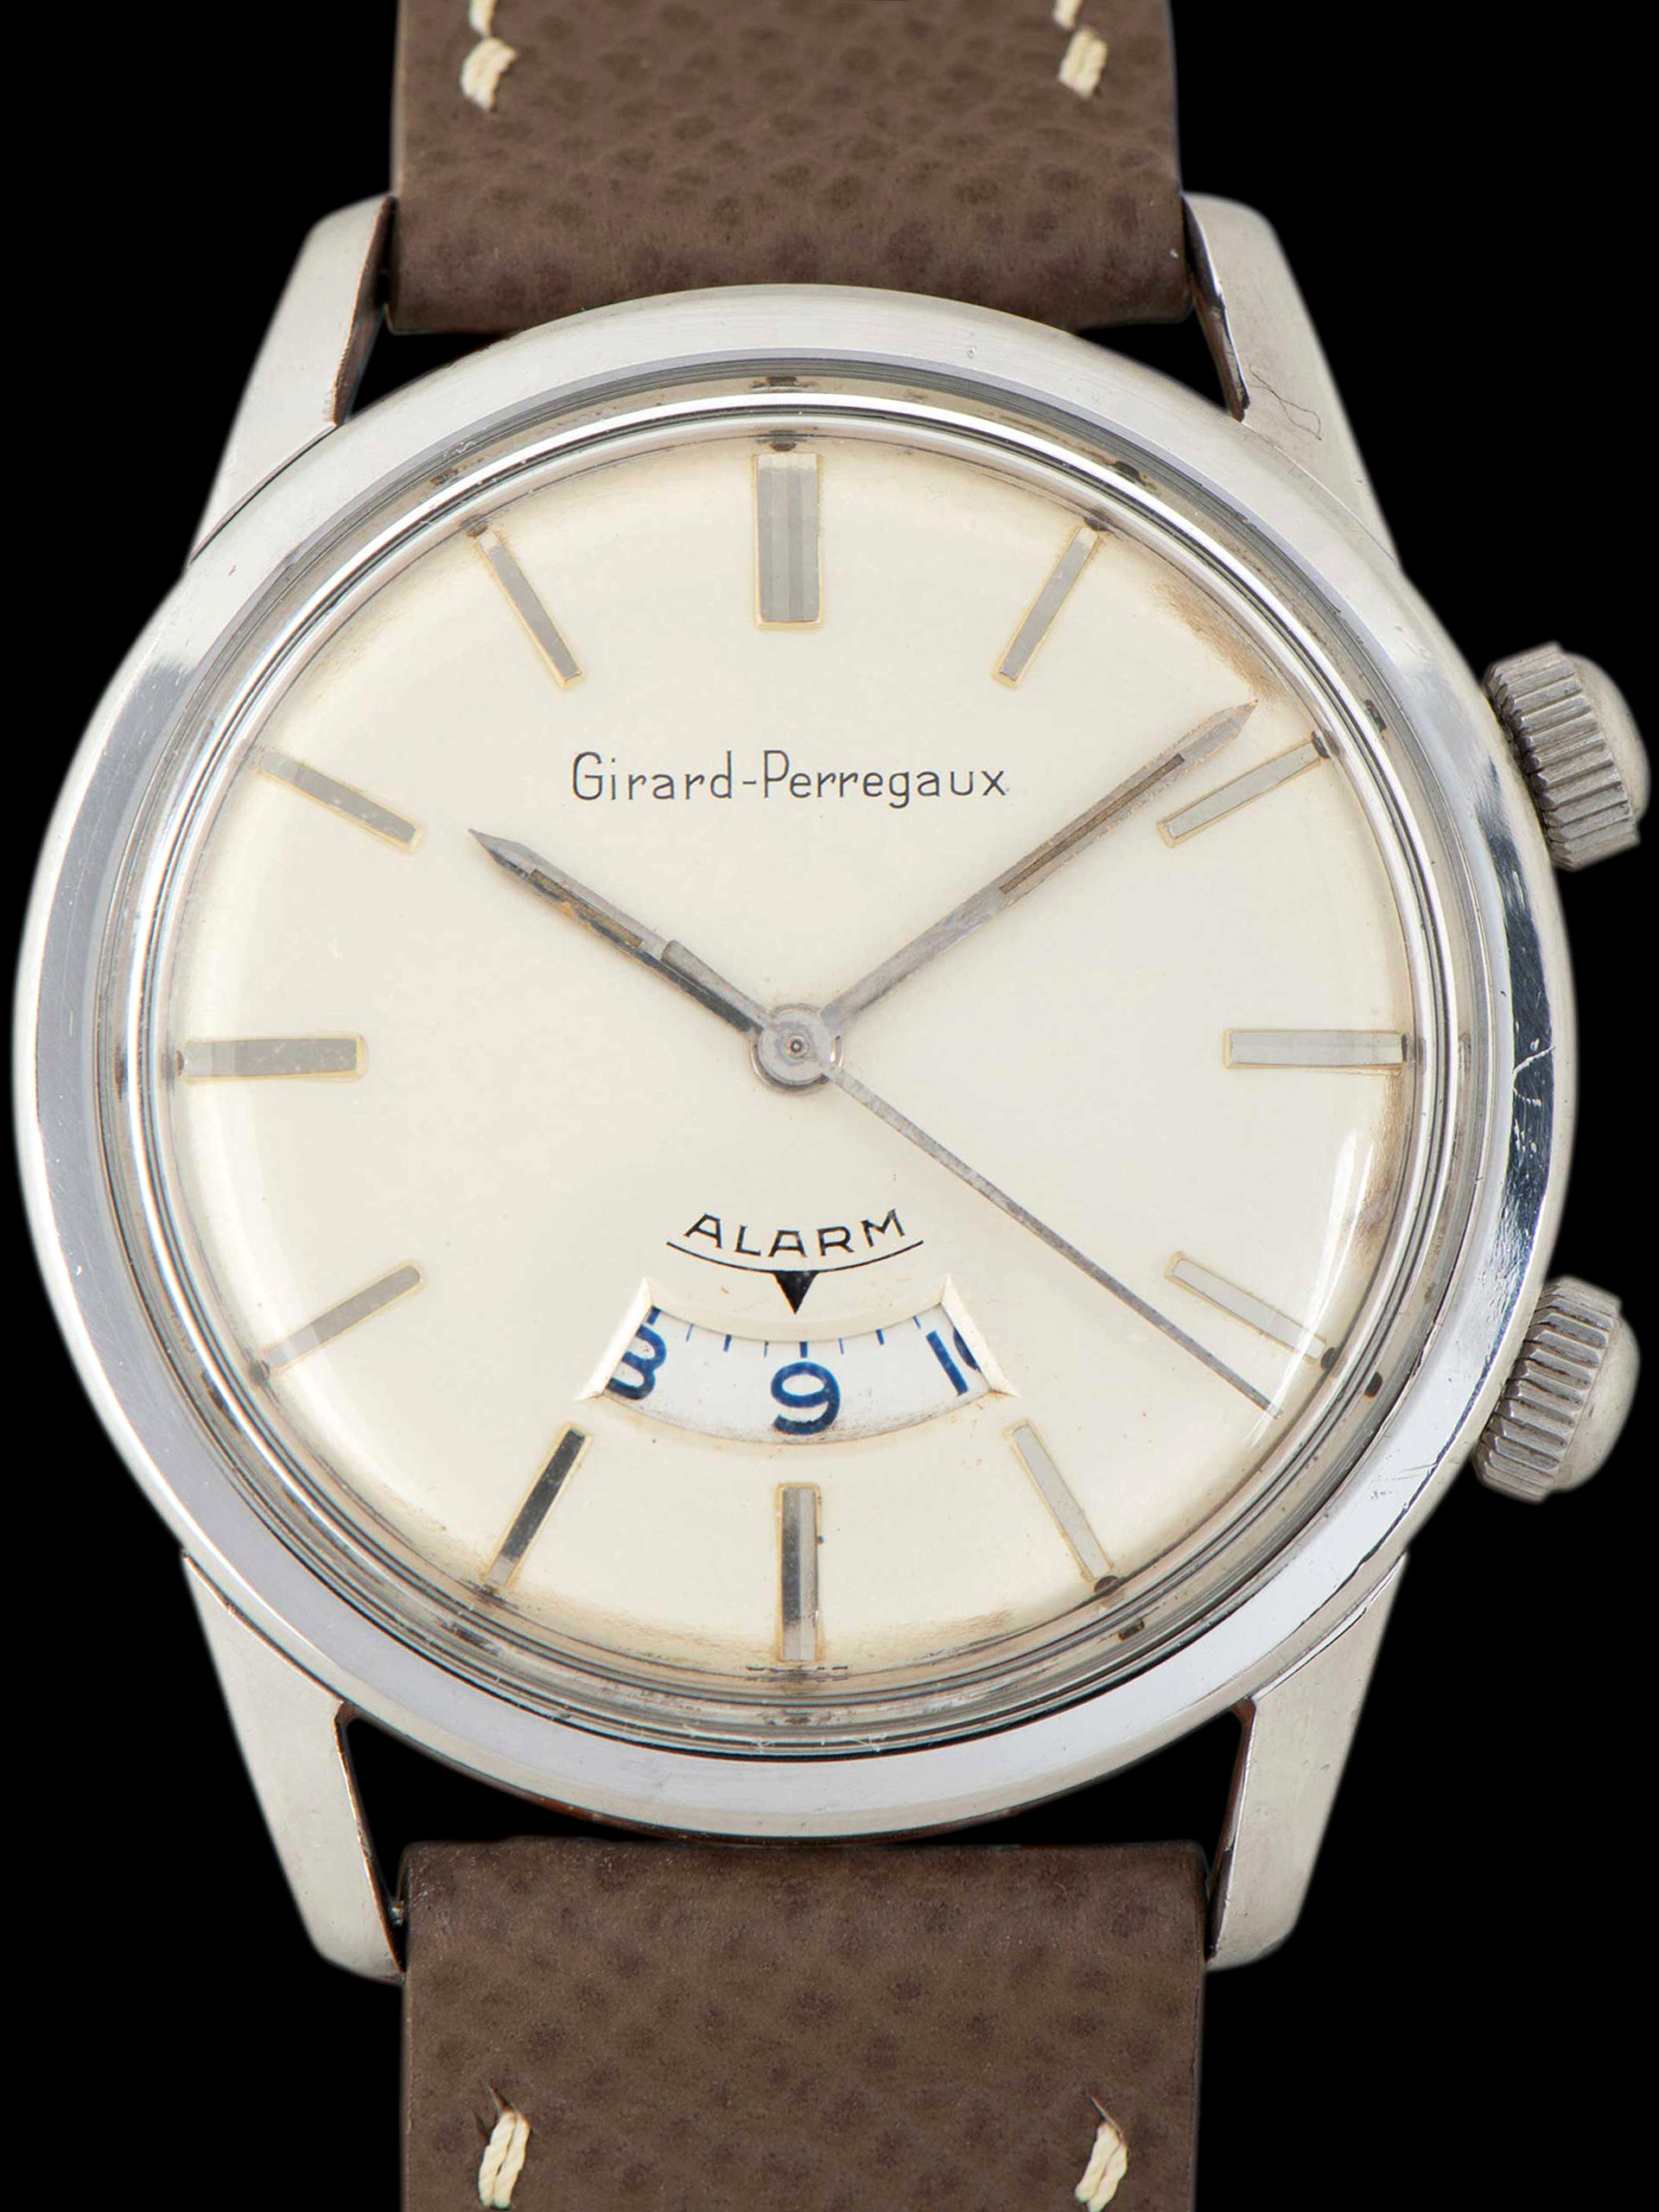 1960s Girard Perregaux Alarm